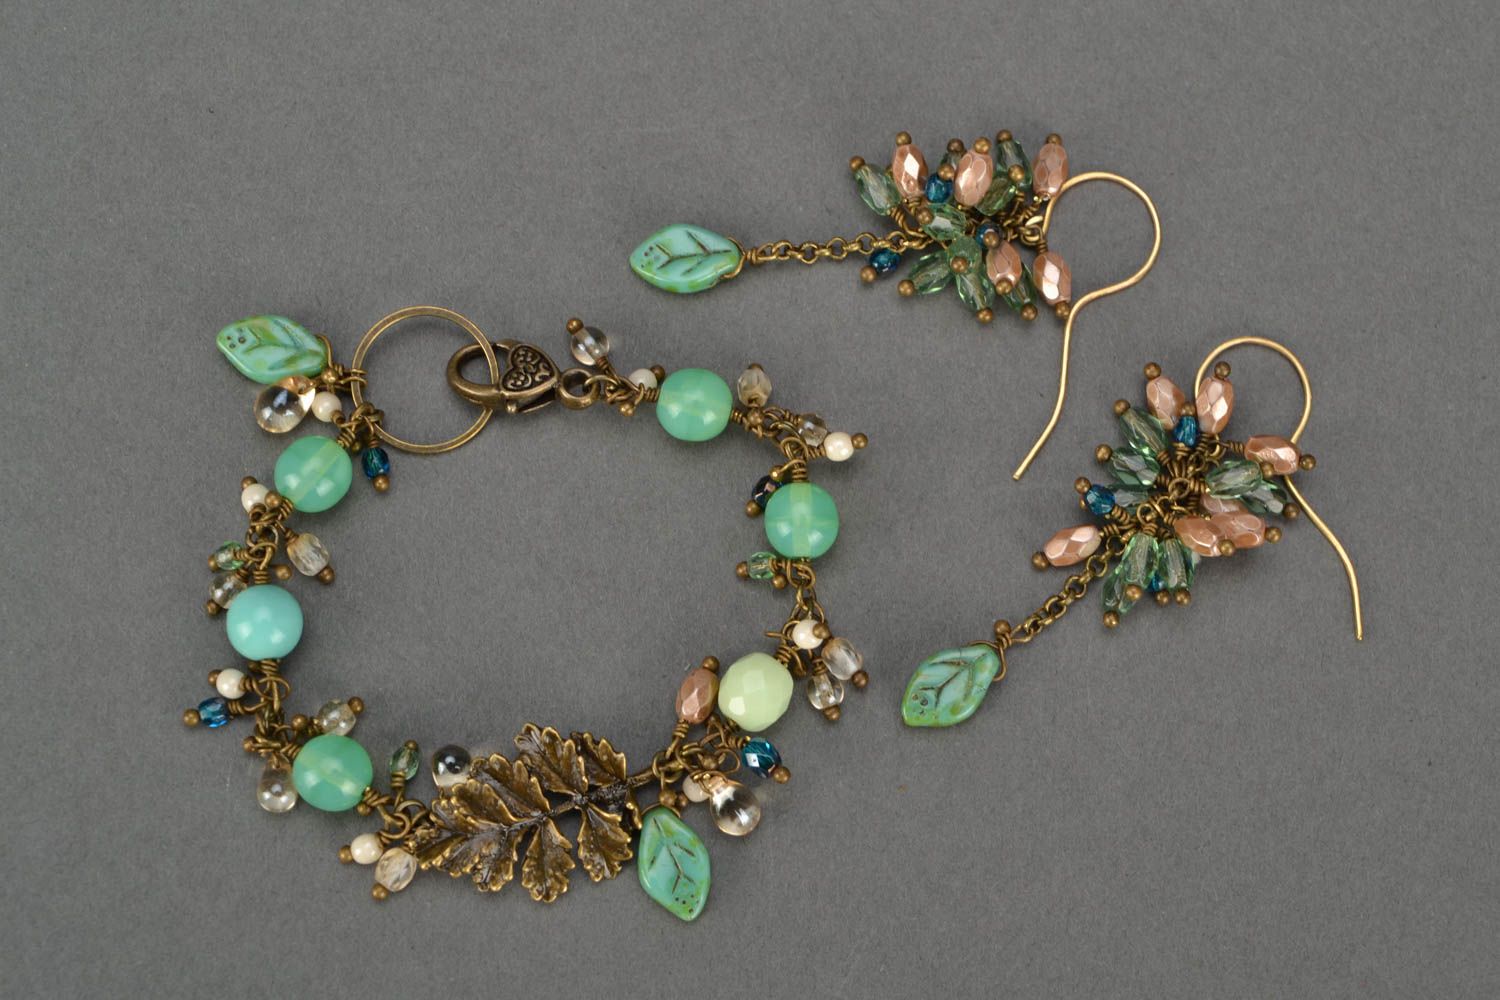 Female beautiful handmade jewelry made of glass beads bracelet and earrings photo 1